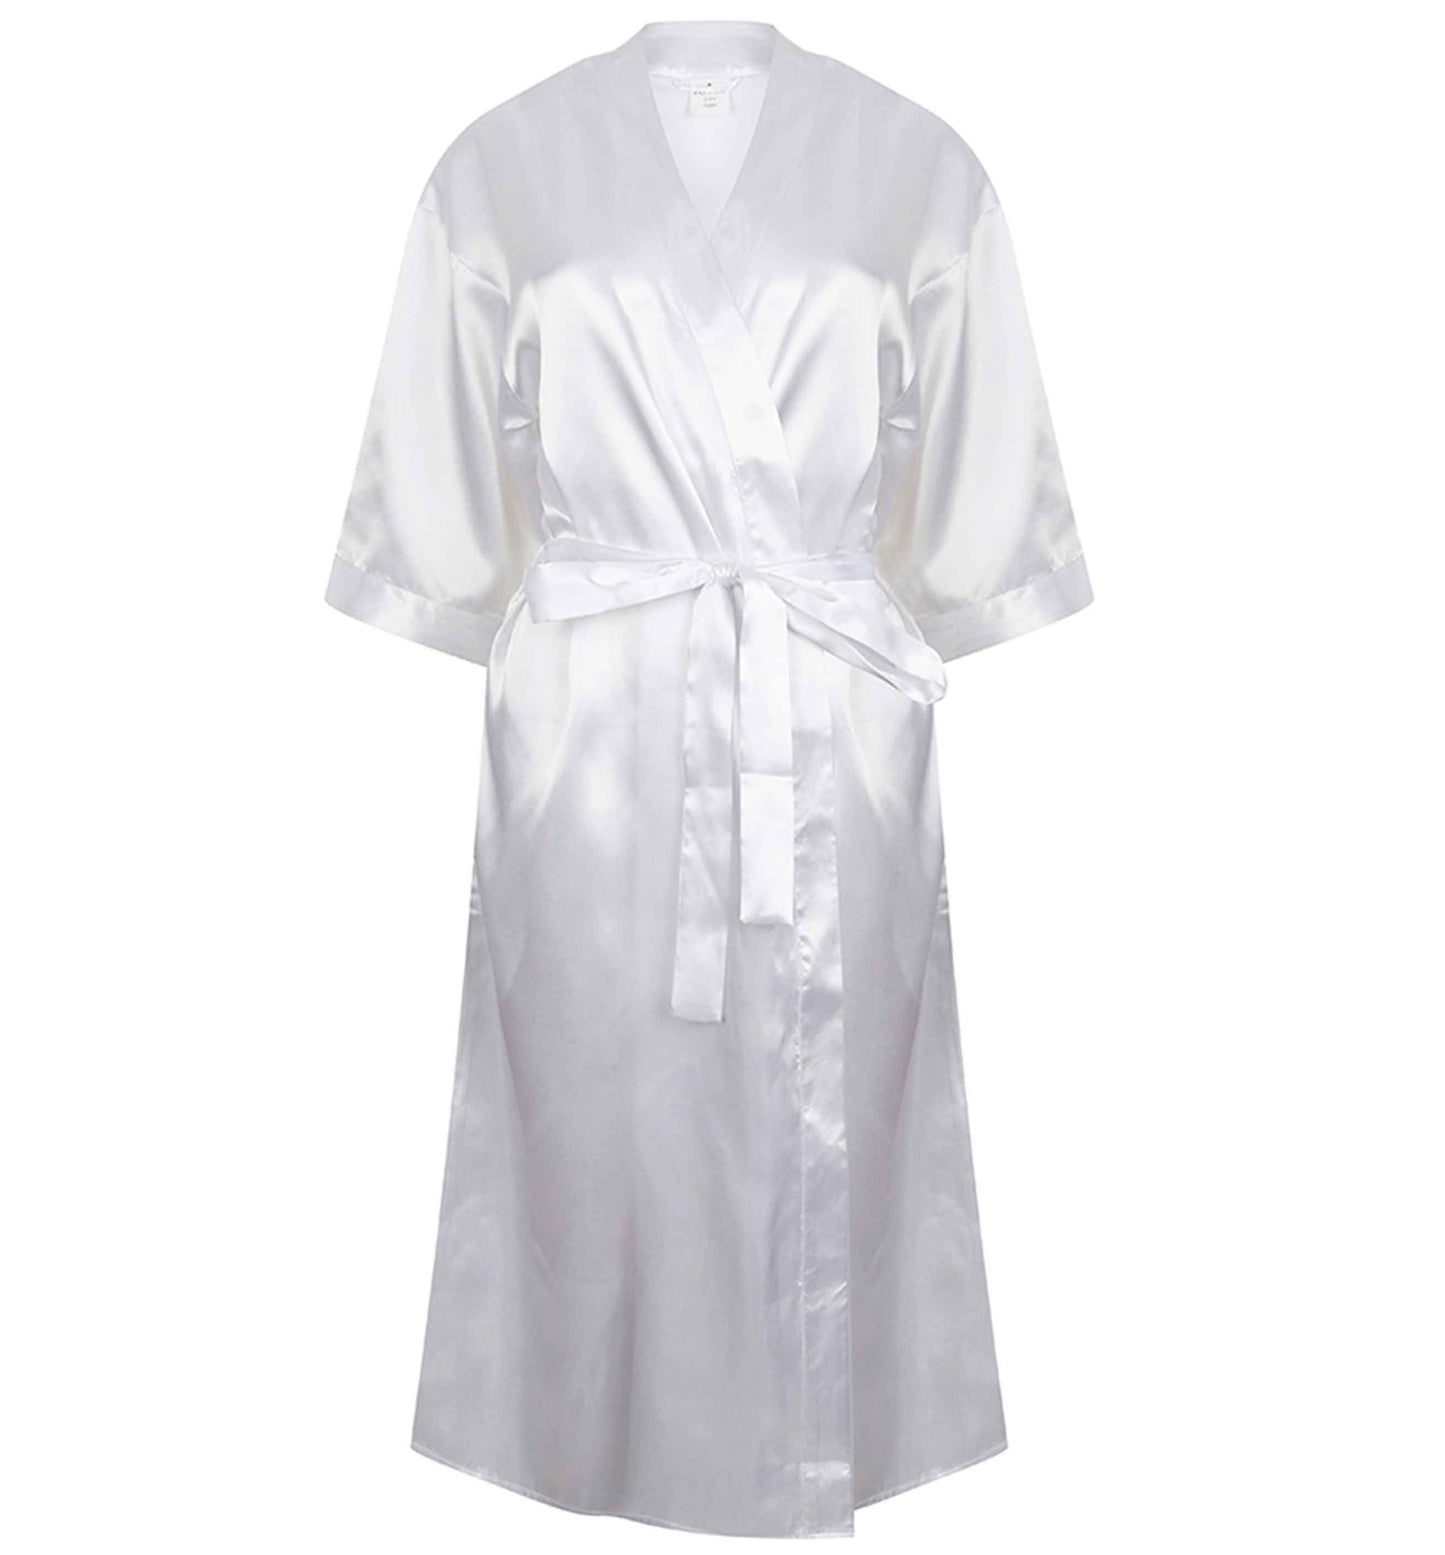 Who let the hens out | 8-18 | Kimono style satin robe | Ladies dressing gown